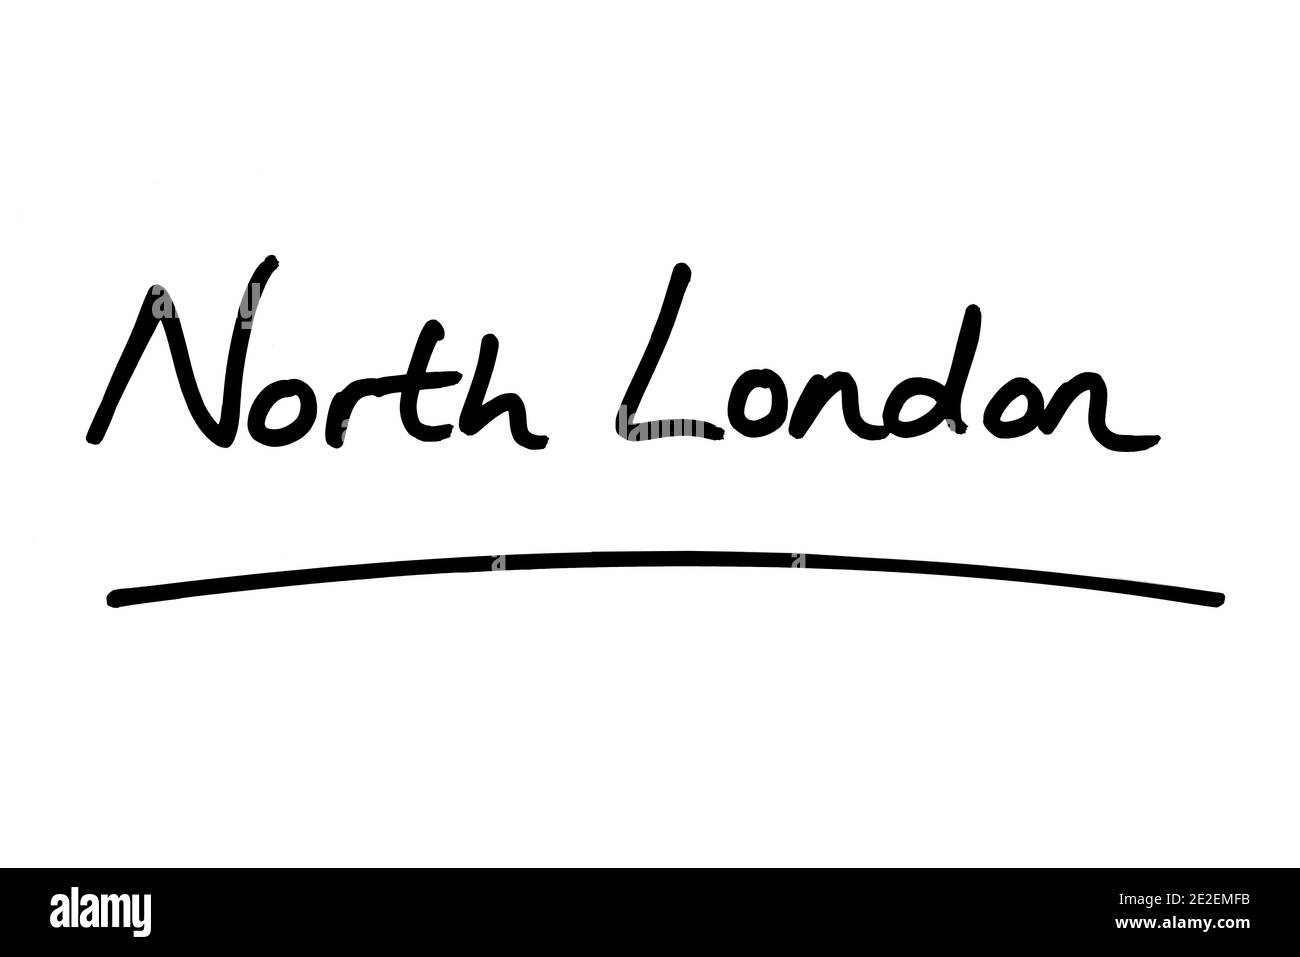 North London, handwritten on a white background. Stock Photo